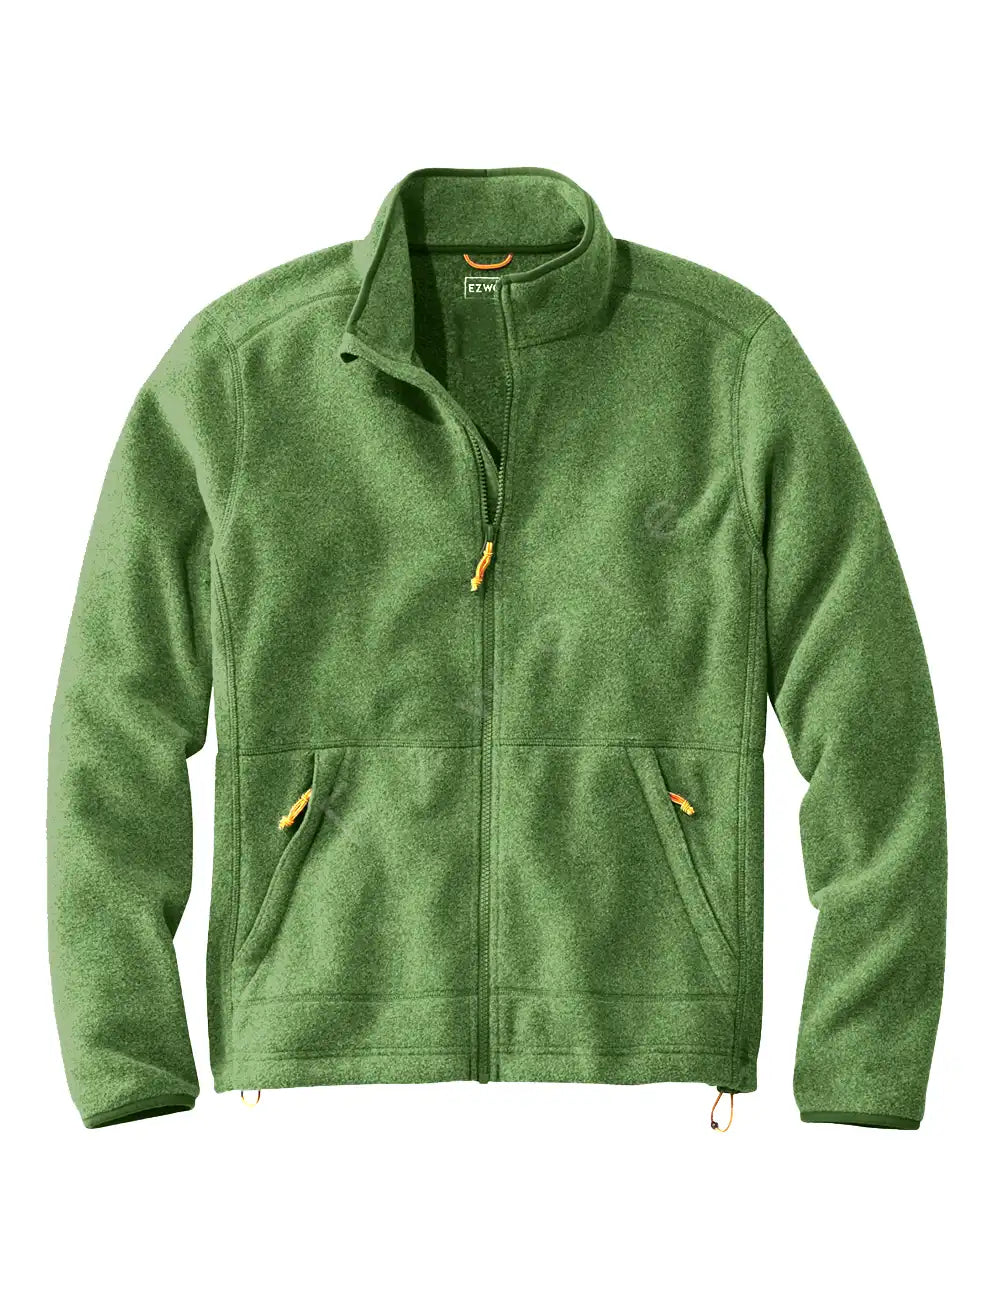 Men's Mountain Classic Green Fleece Jacket